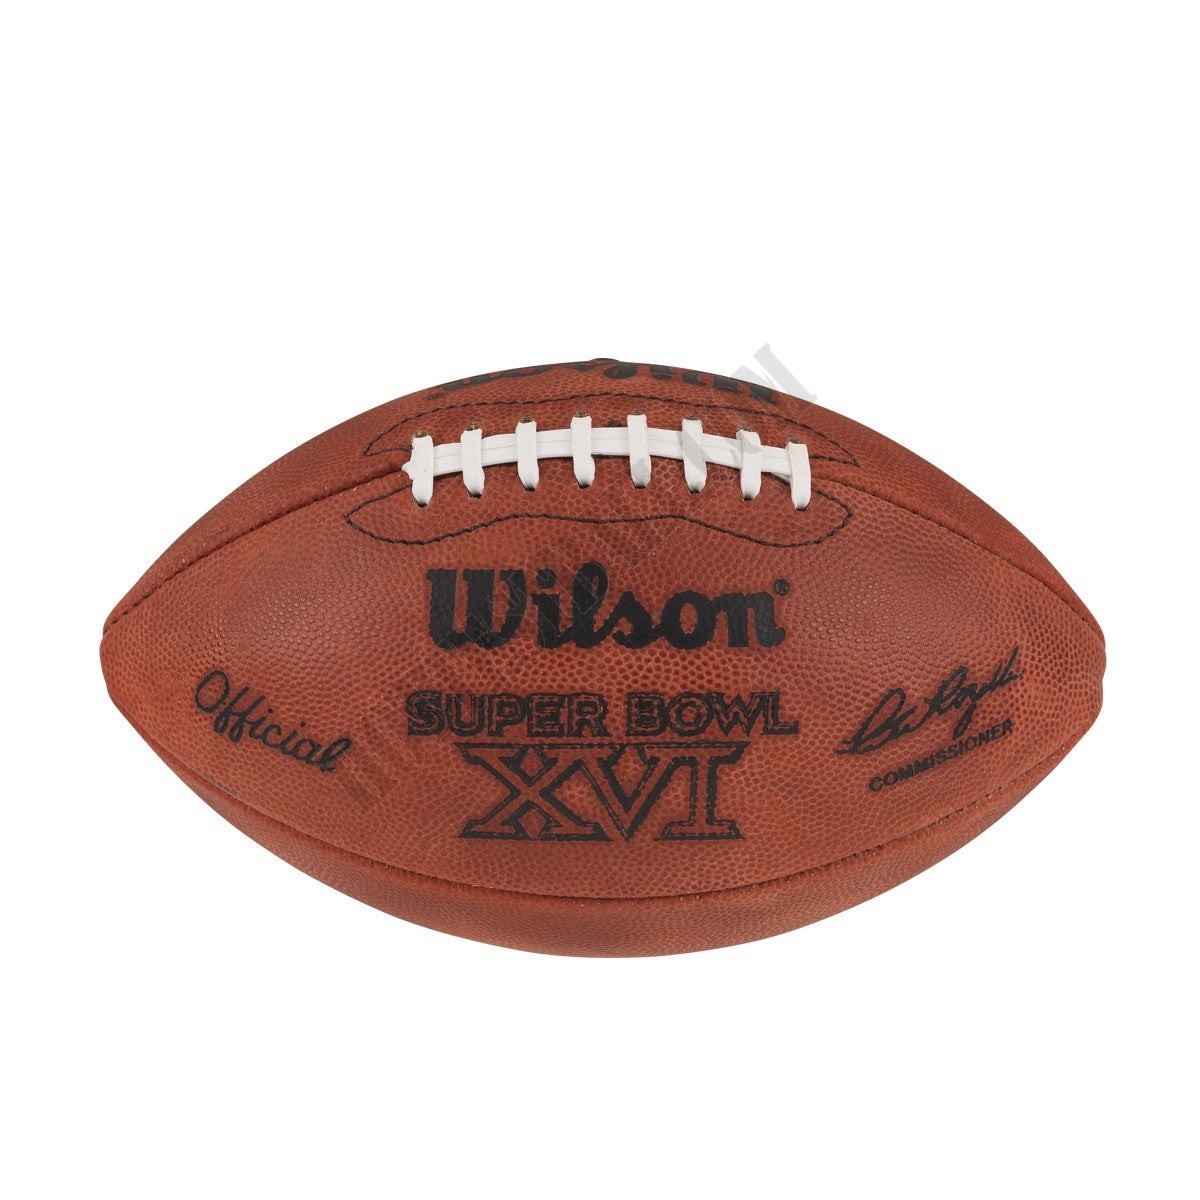 Super Bowl XVI Game Football - San Francisco 49ers ● Wilson Promotions - Super Bowl XVI Game Football - San Francisco 49ers ● Wilson Promotions